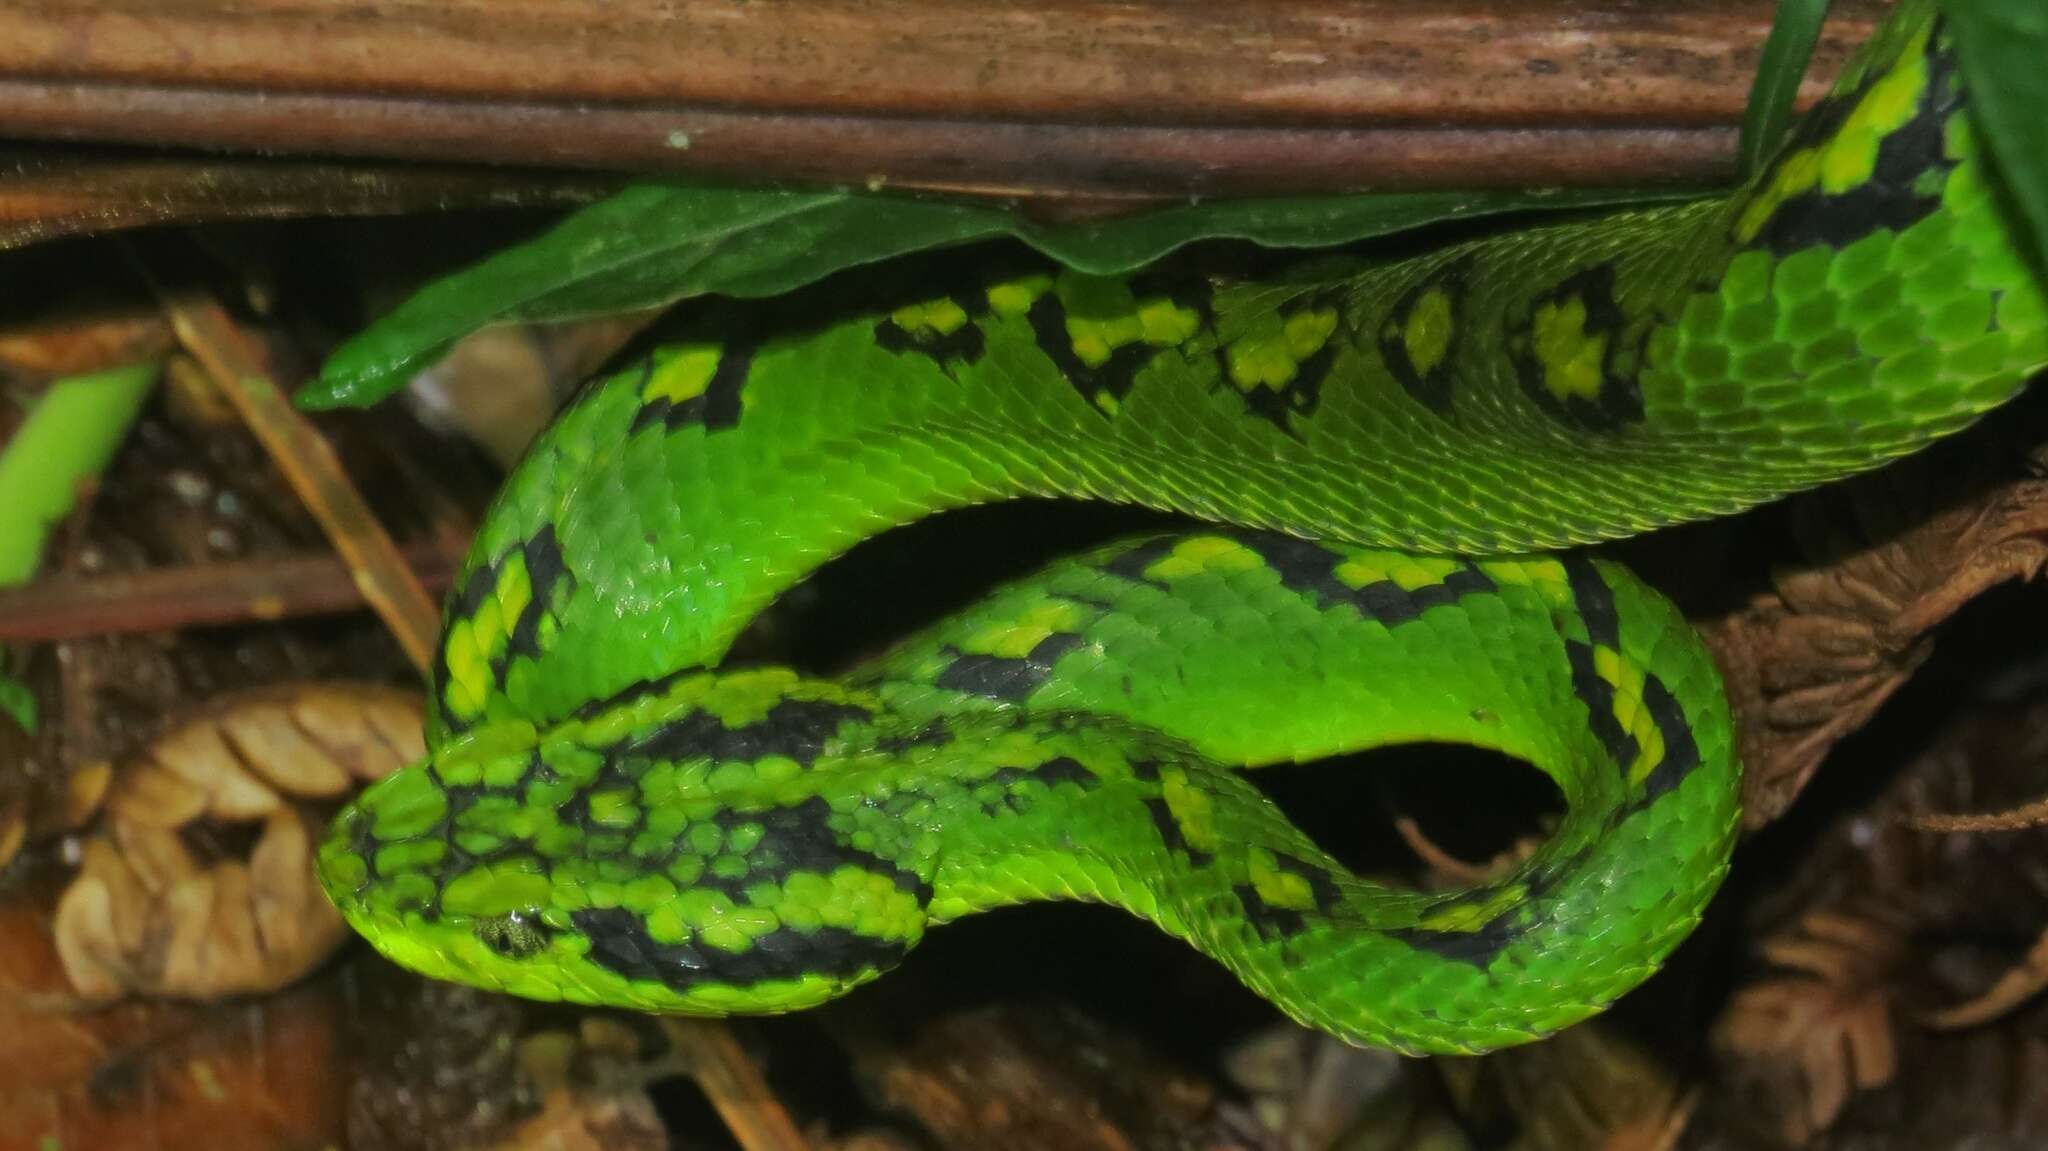 Image of Yellow-blotched Palm Pit Viper